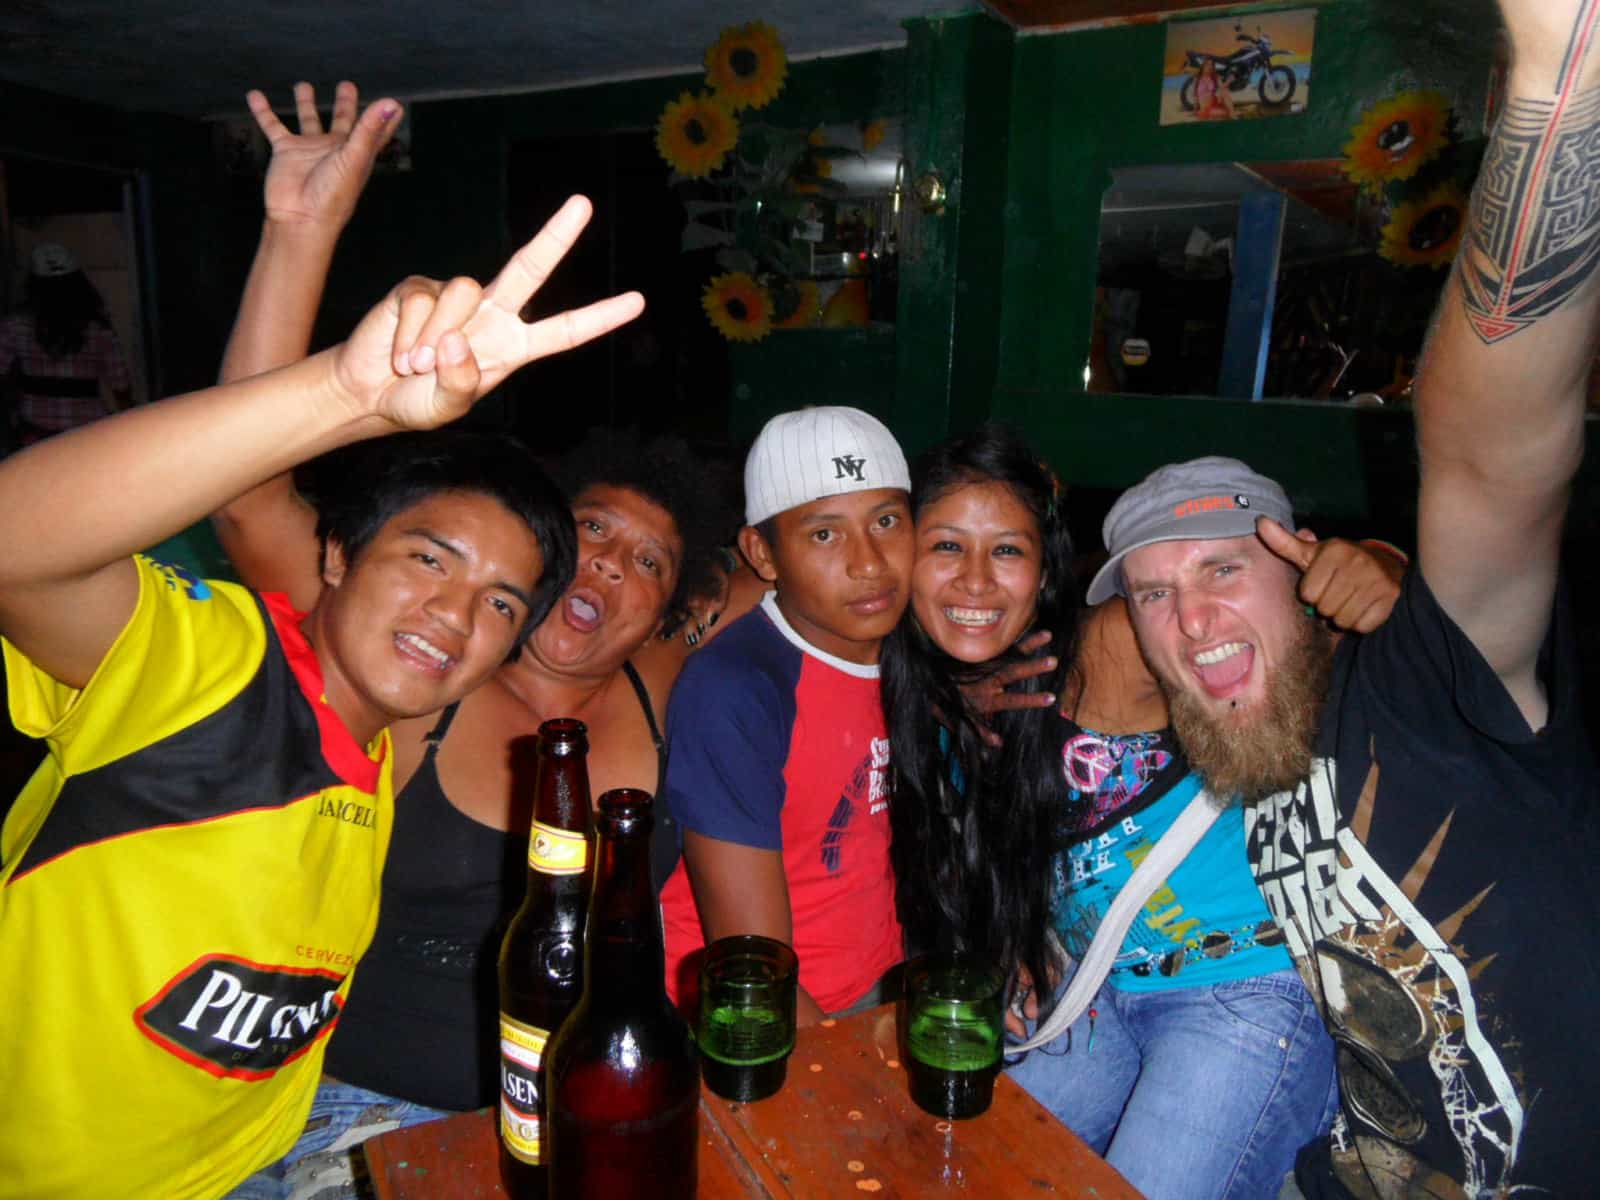 The friendly people of Ecuador!